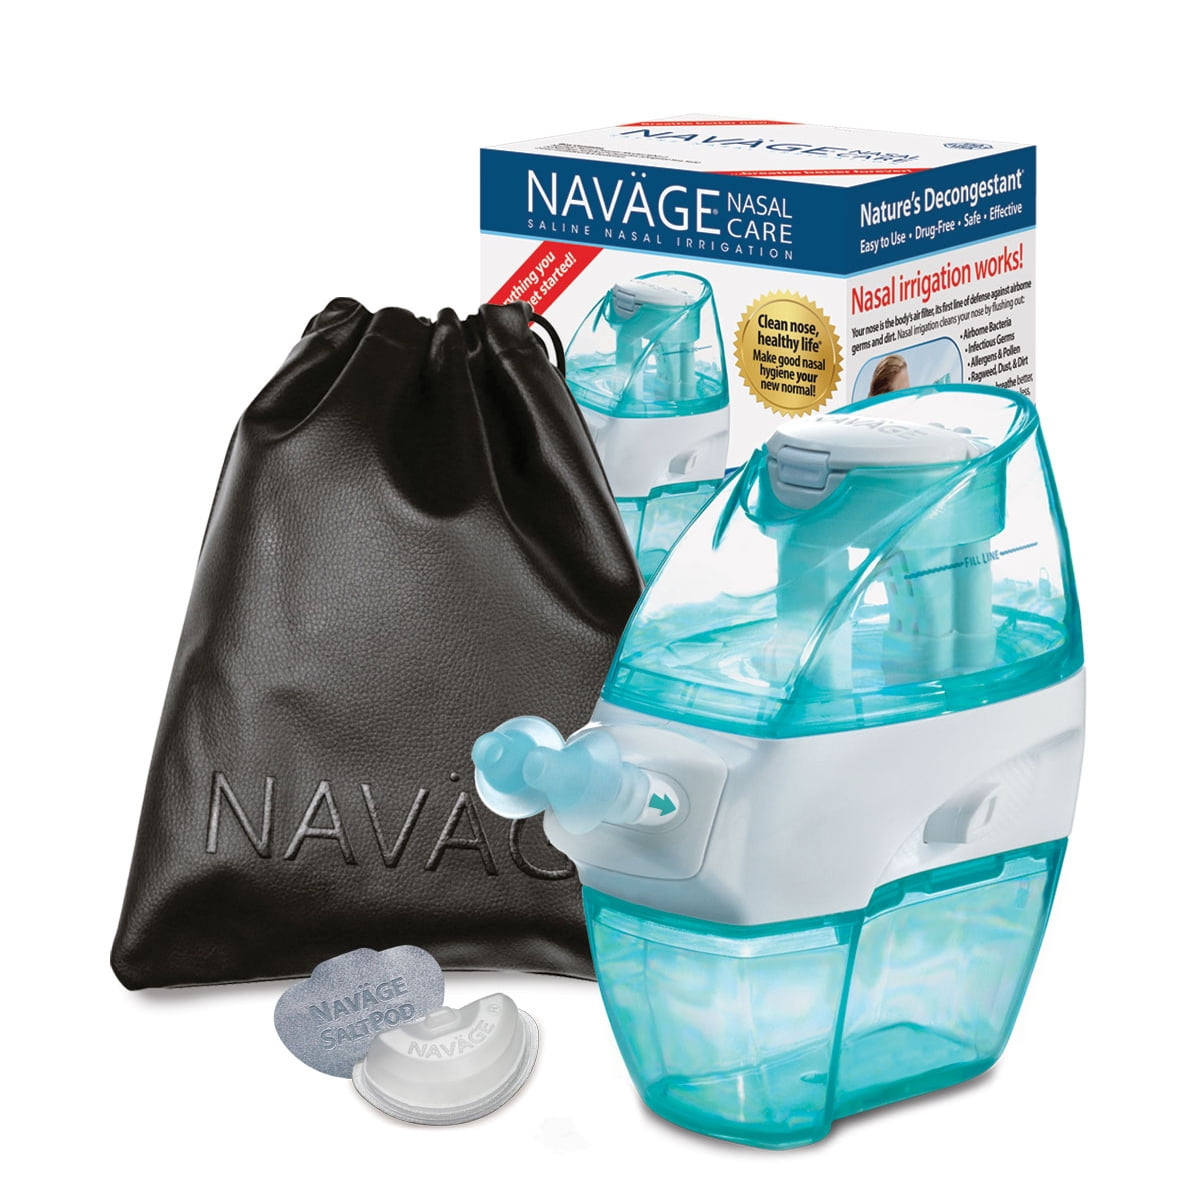 Navage Nasal Care TRAVEL Bundle: Navage Nose Cleaner, Black Travel Bag, and  20 SaltPods